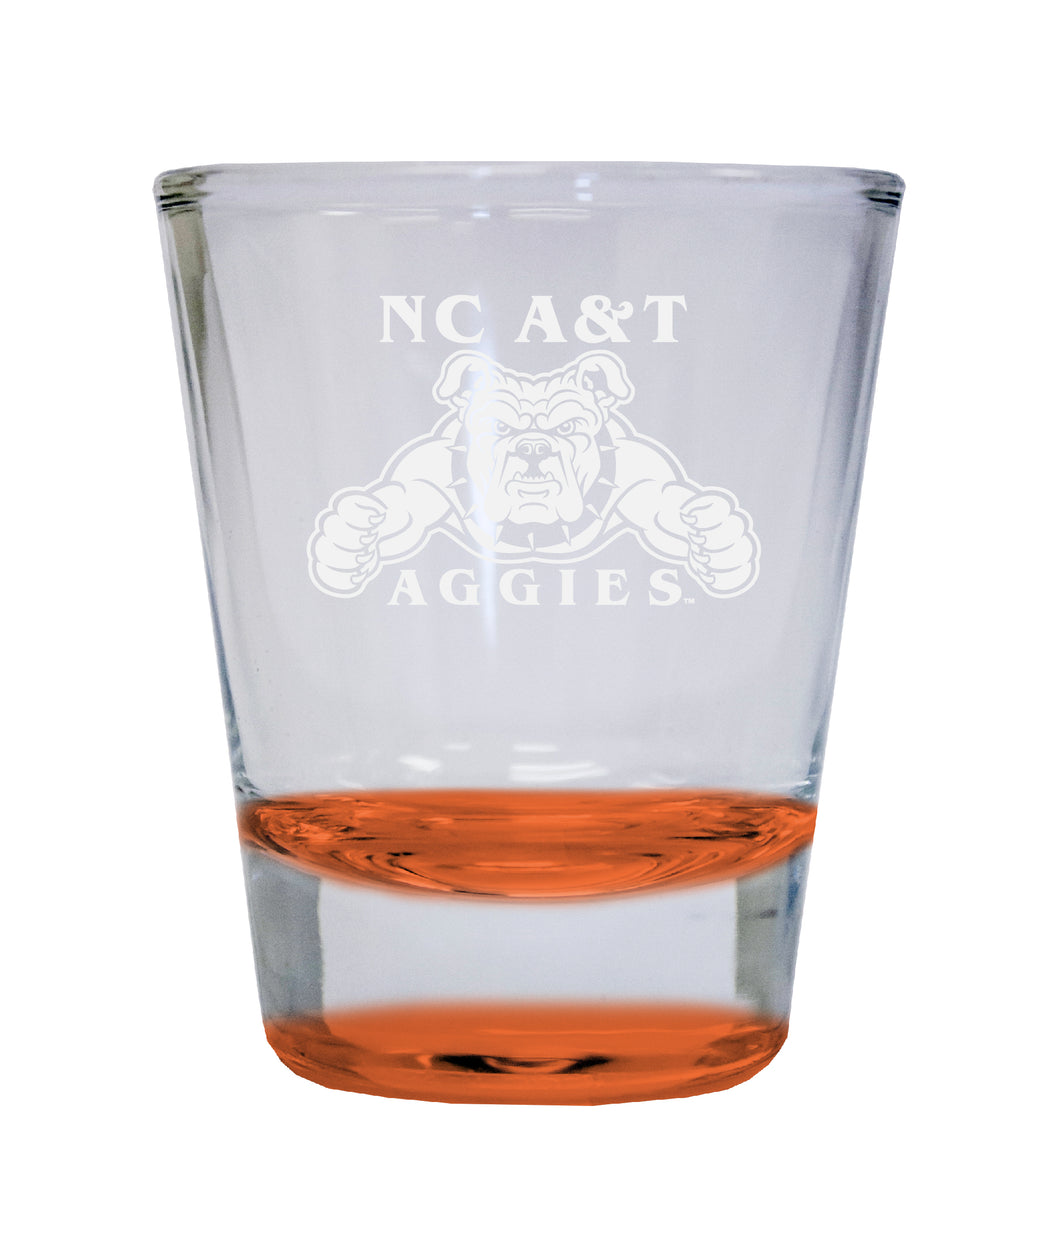 North Carolina A&T State Aggies Etched Round Shot Glass 2 oz Orange